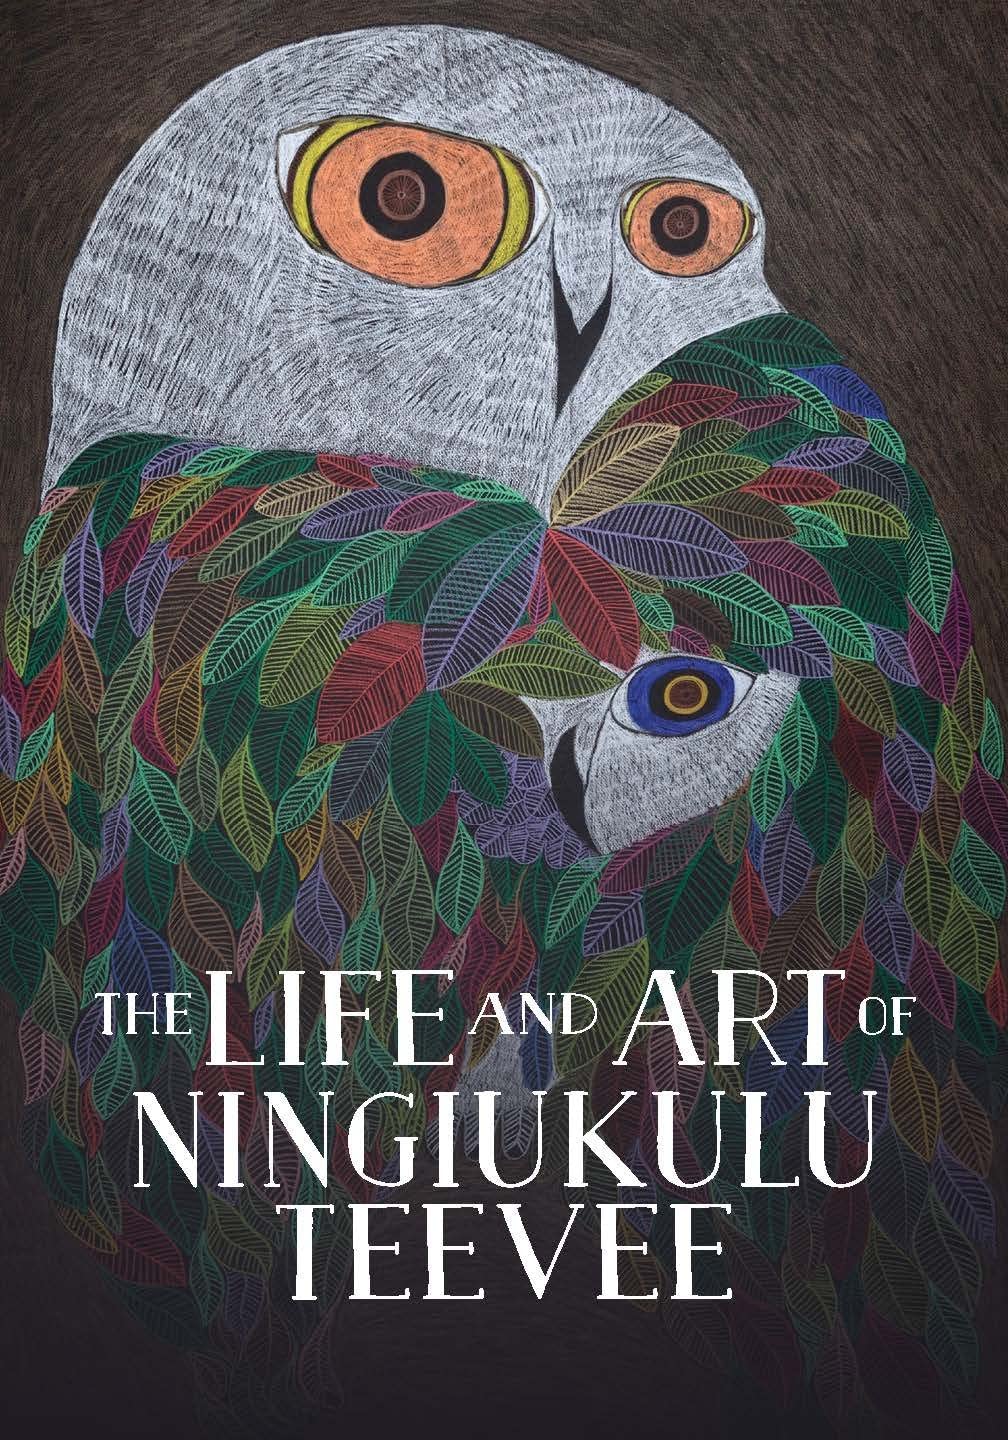 The Life and Art of Ningiukulu Teevee by Napatsi Folger